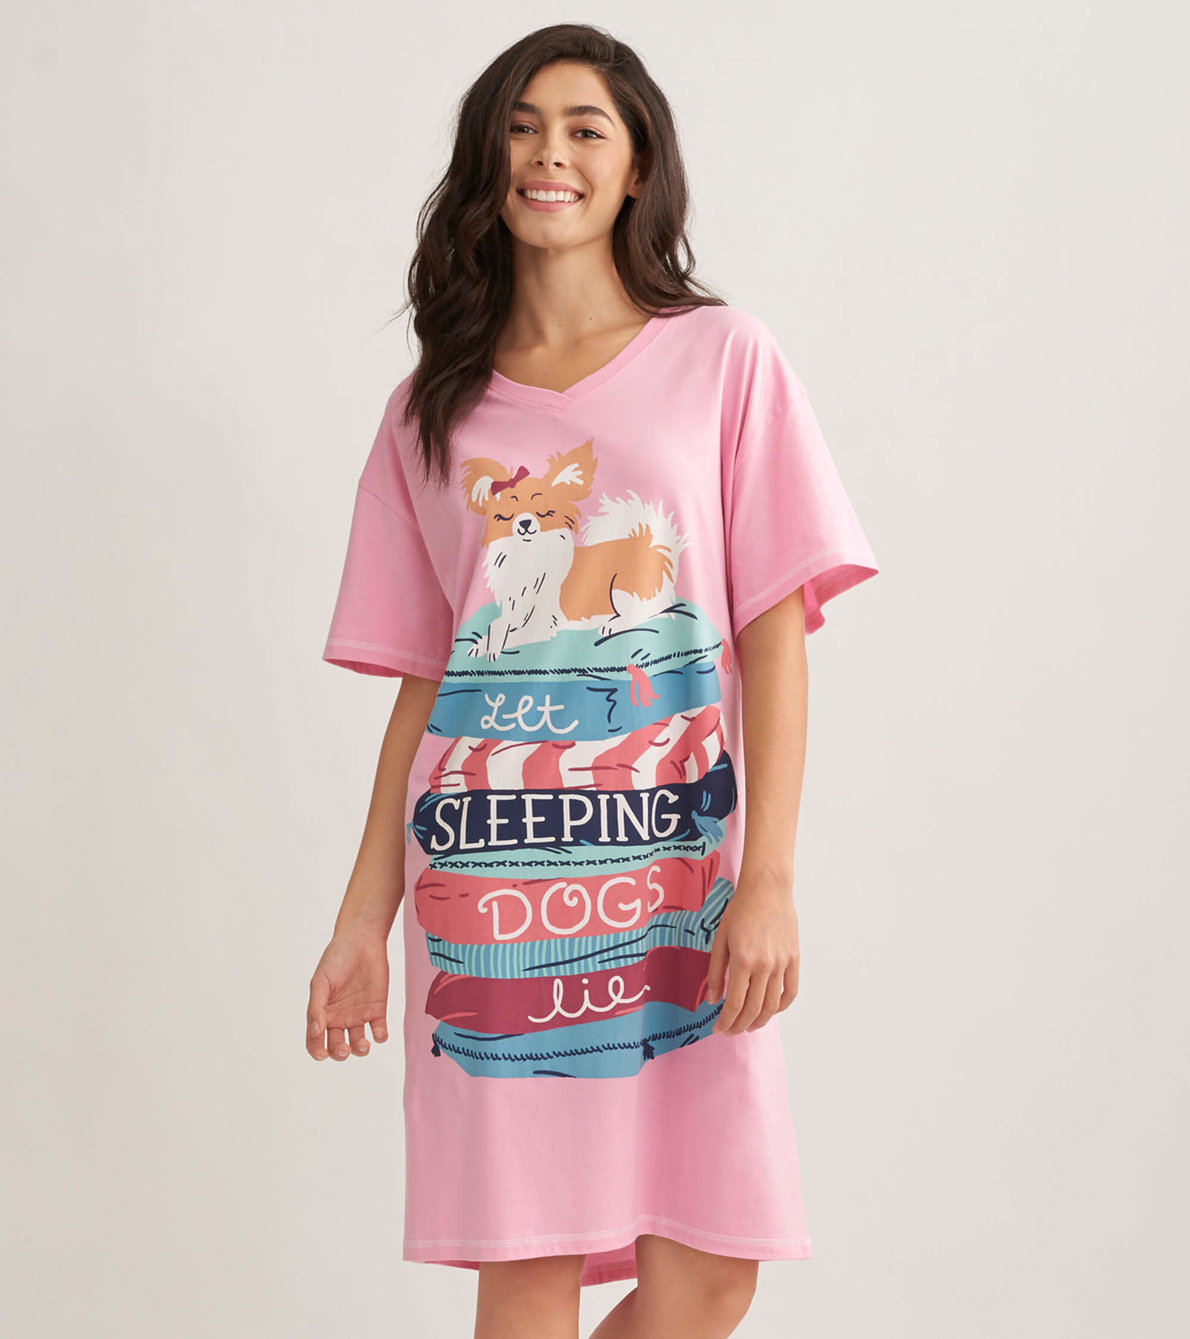 View larger image of Let Sleeping Dogs Cushions Women's Sleepshirt